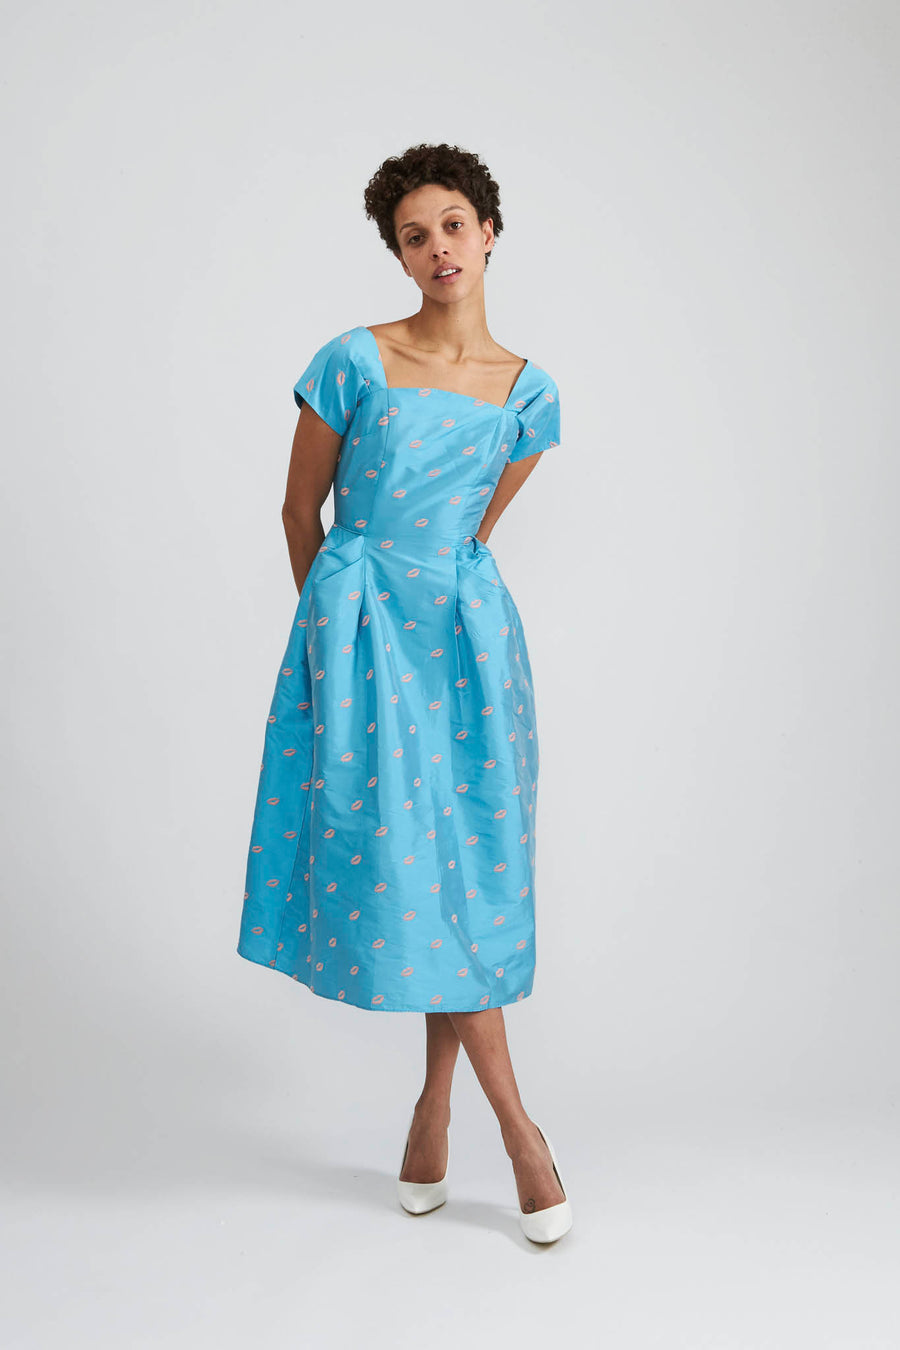 BATSHEVA - Lillian Dress in Turquoise Taffeta with Embroidered Lips